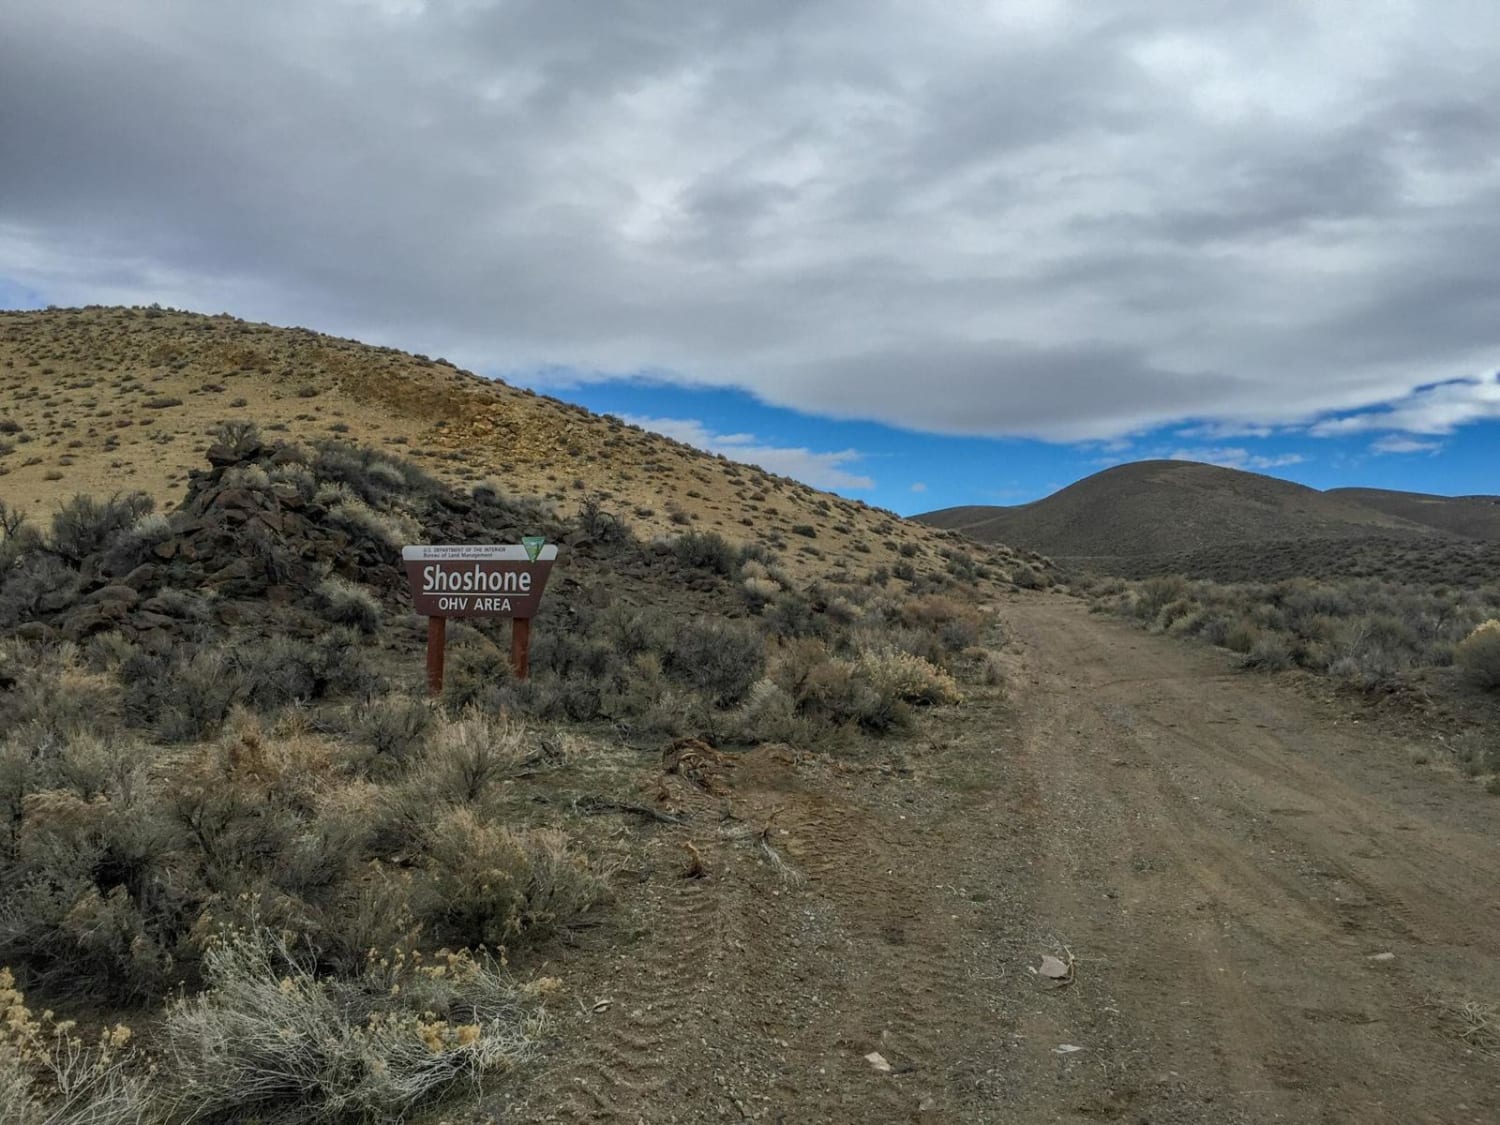 Shoshone ATV Trail